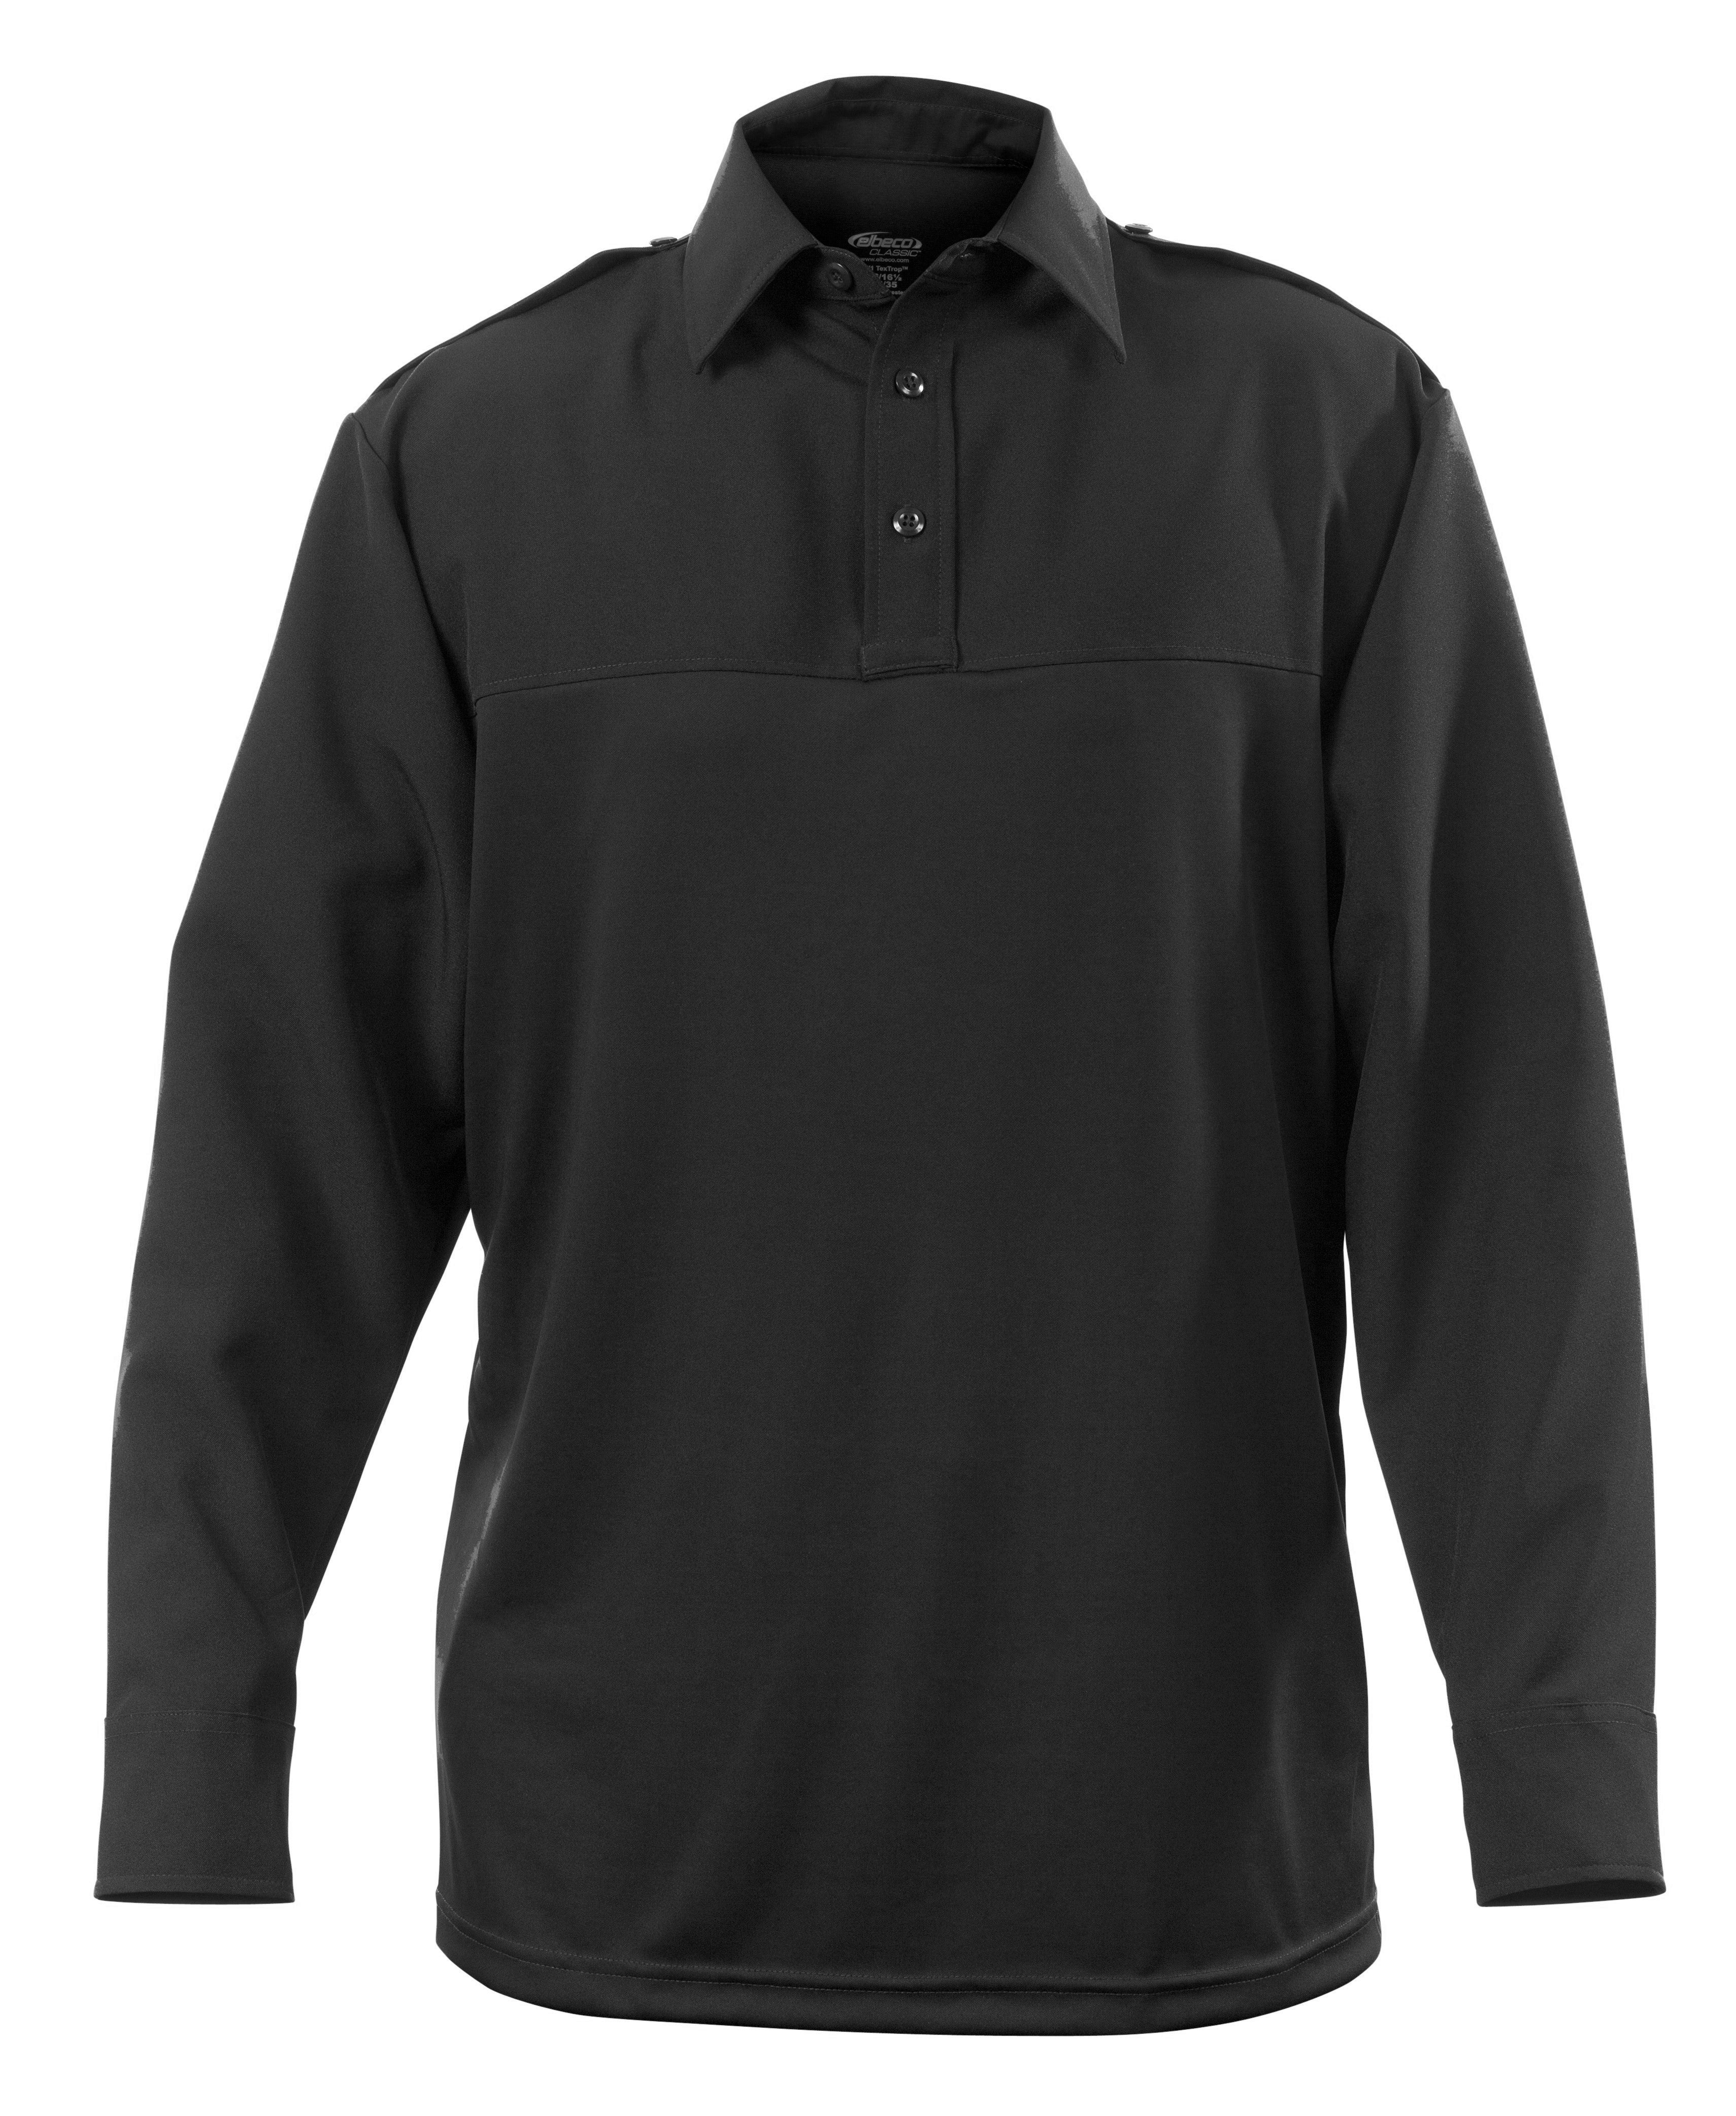 UV1 CX360 Undervest Long Sleeve Shirt-Mens-